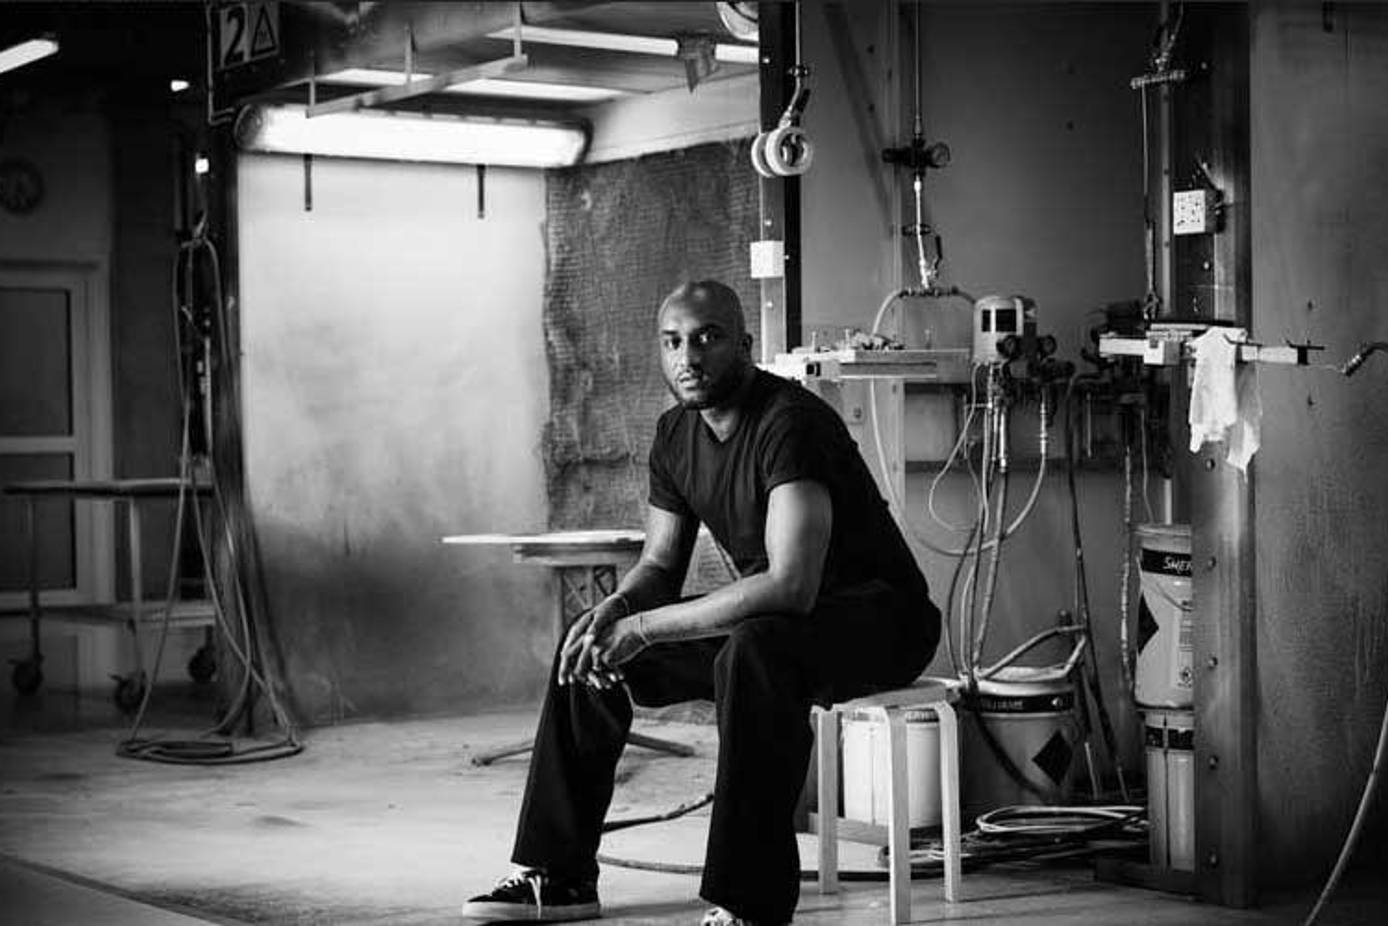 Kanye West's muse designer Virgil Abloh debuts at Paris Fashion